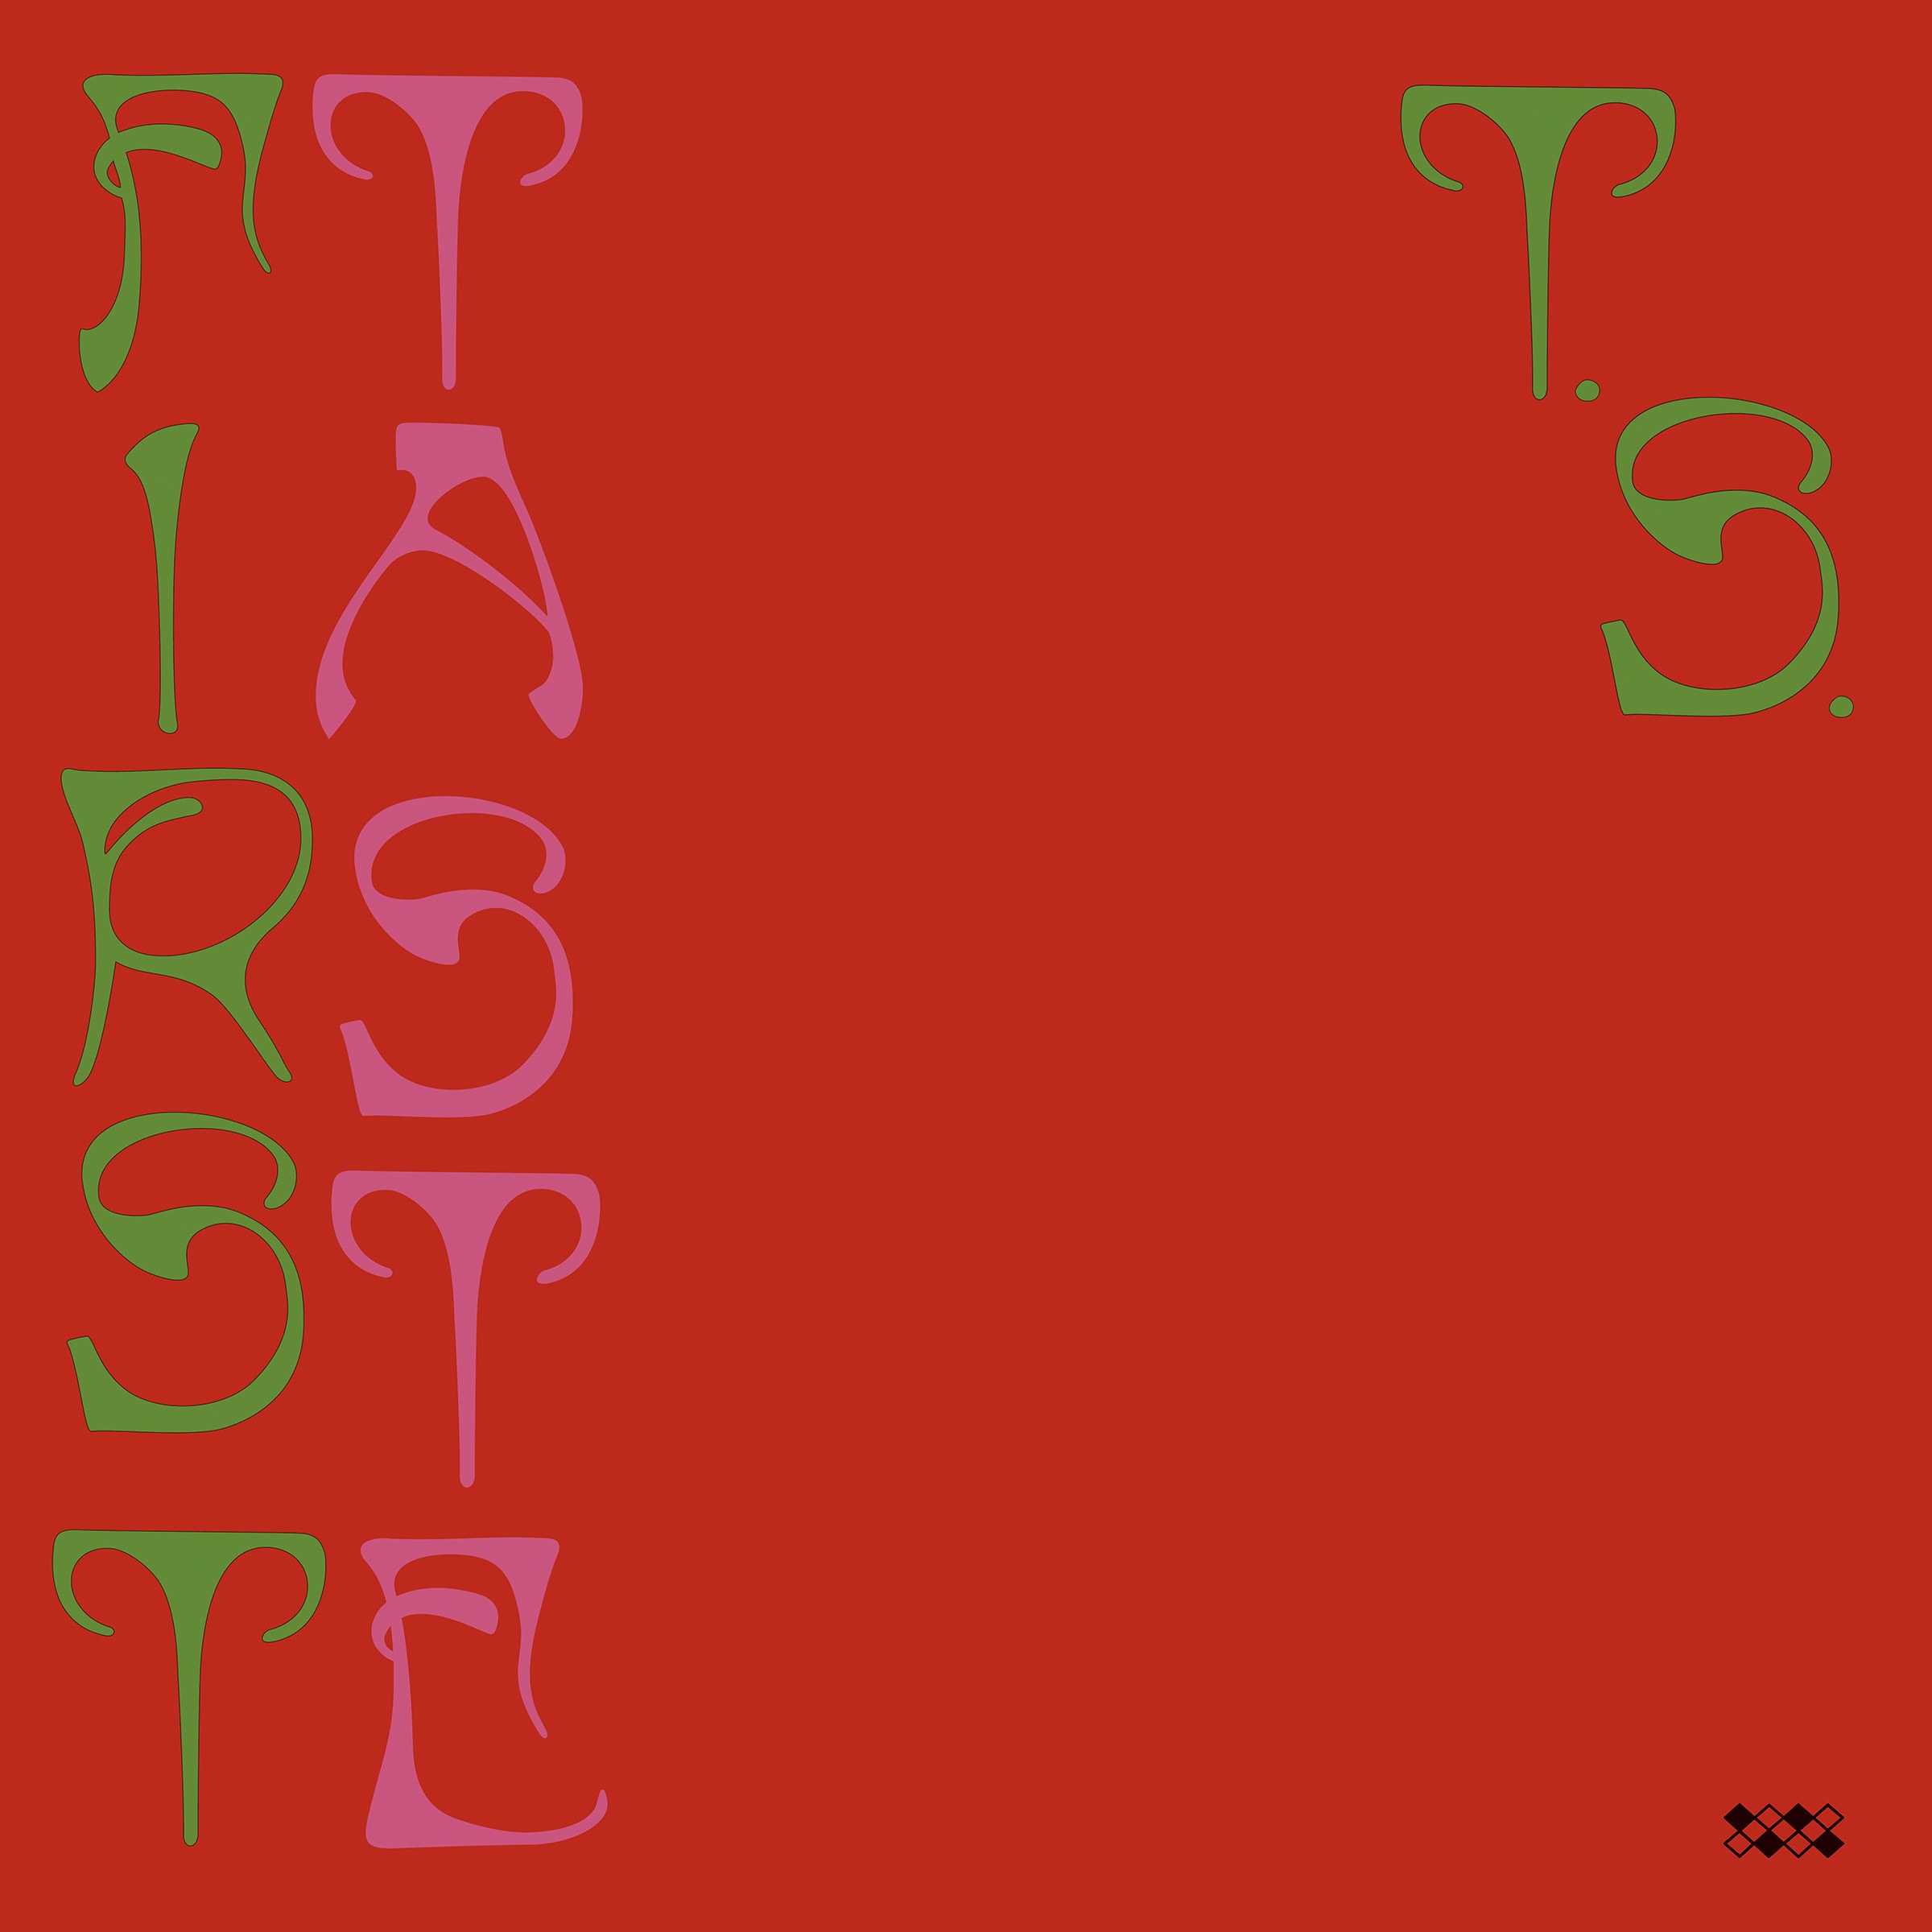 Album Art for "First Taste" by Ty Segall